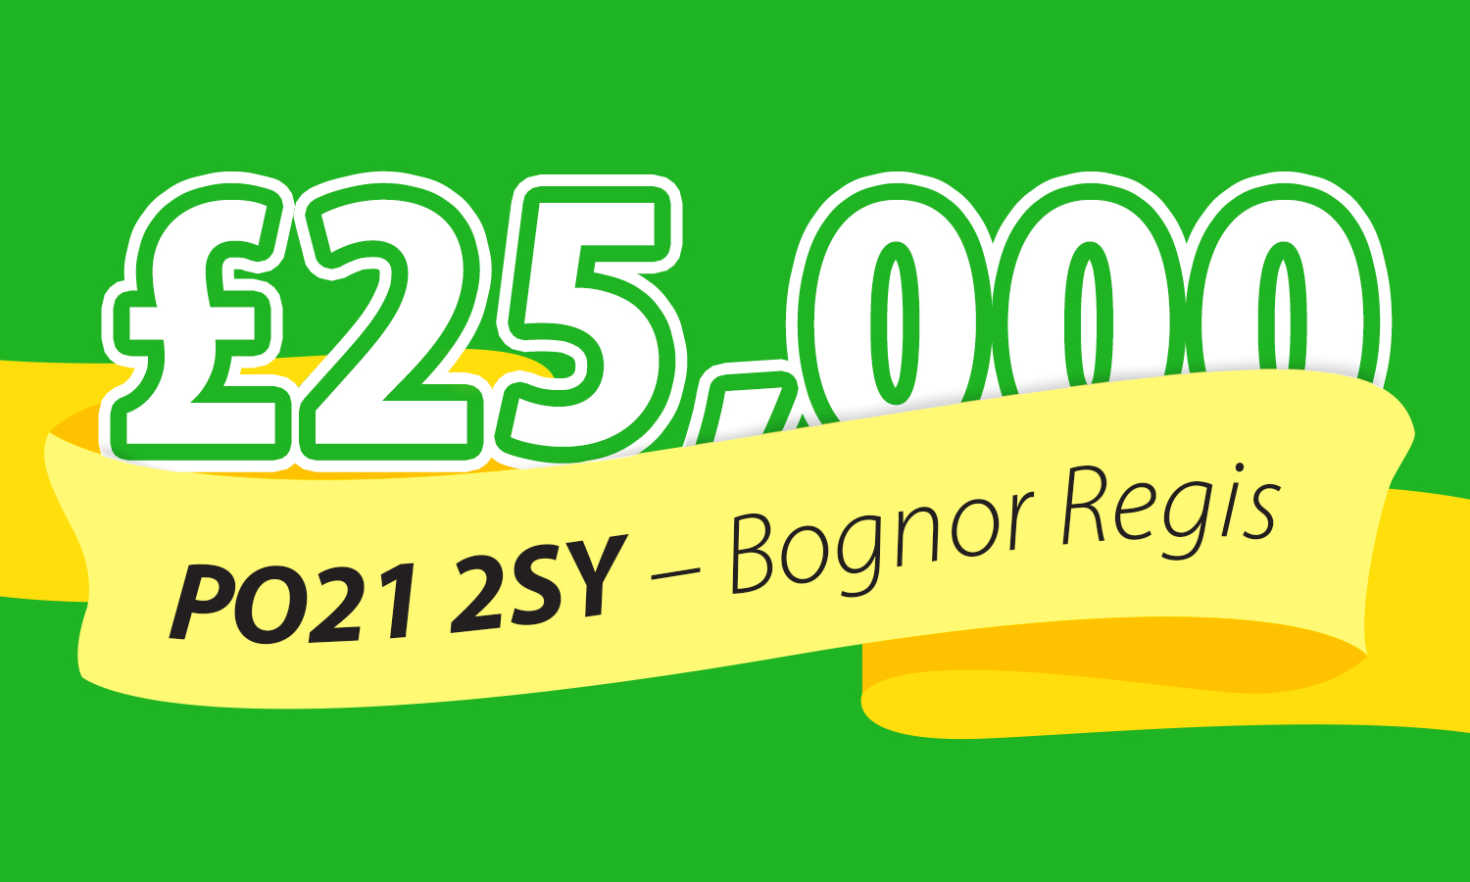 One lucky Bognor Regis player has scooped £25,000